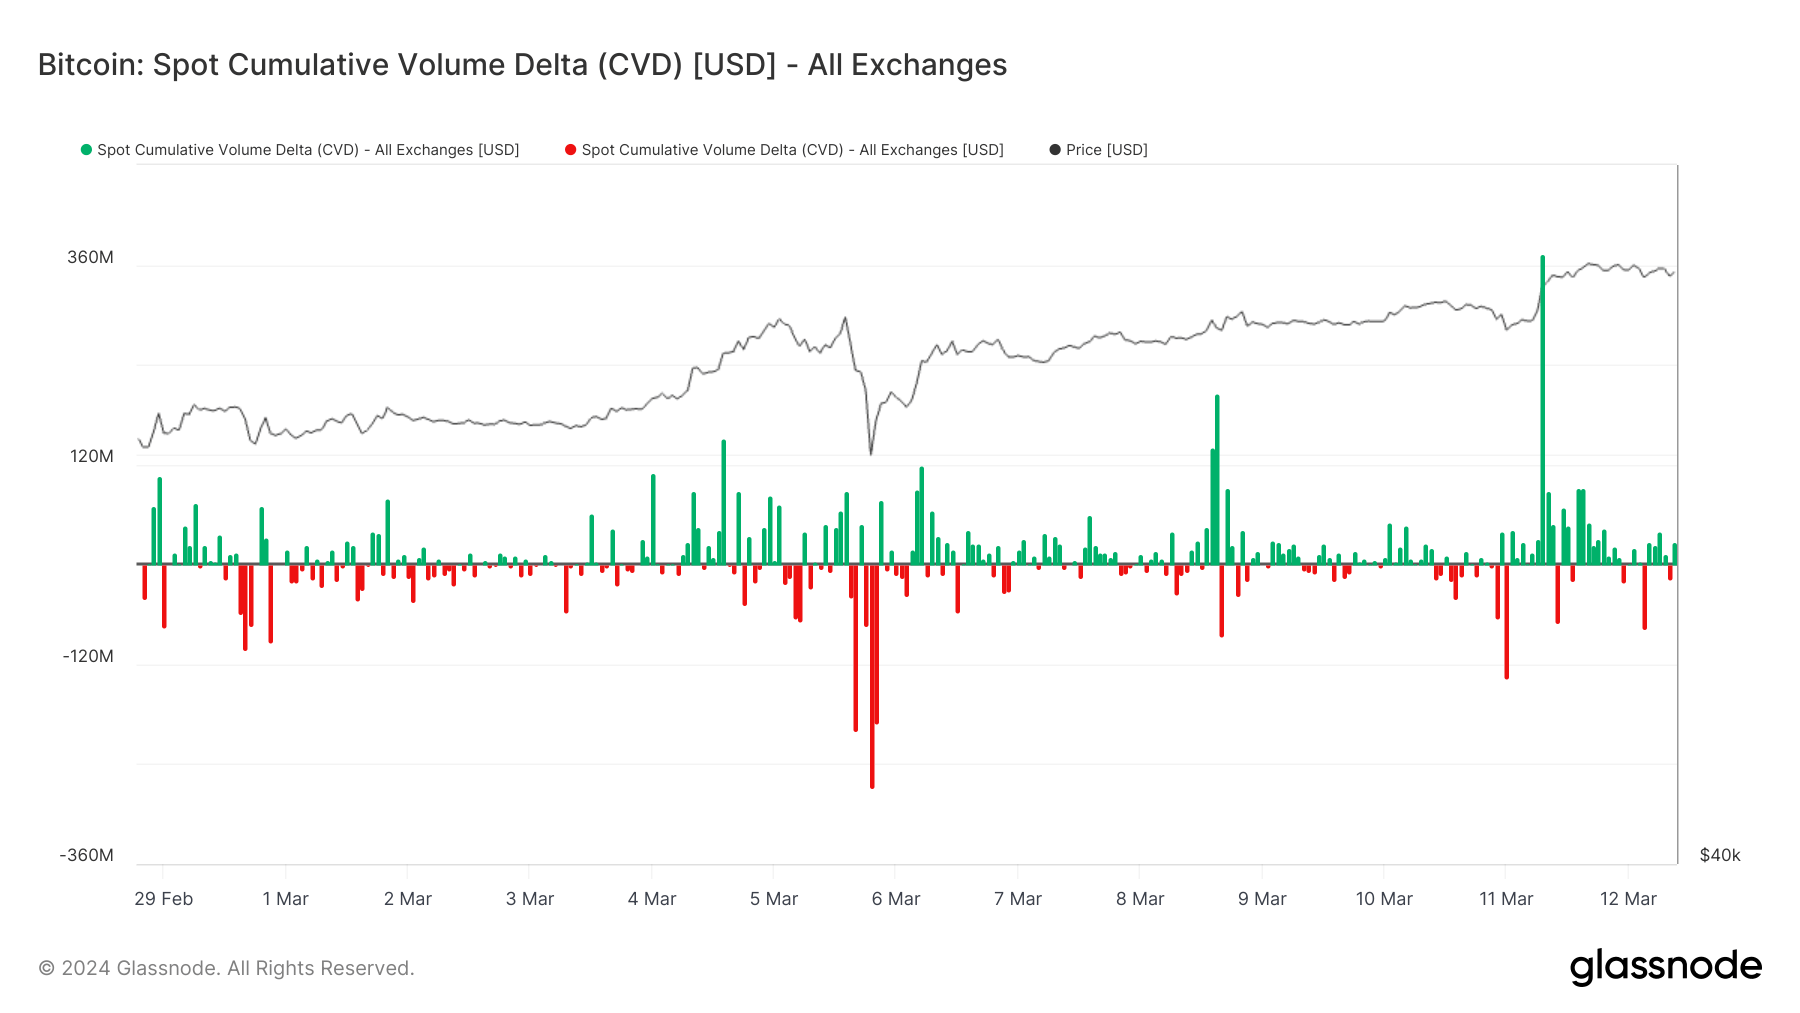 Bitcoin Spot Cumulative Volume Delta Hourly (CVD) (Source: Glassnode)